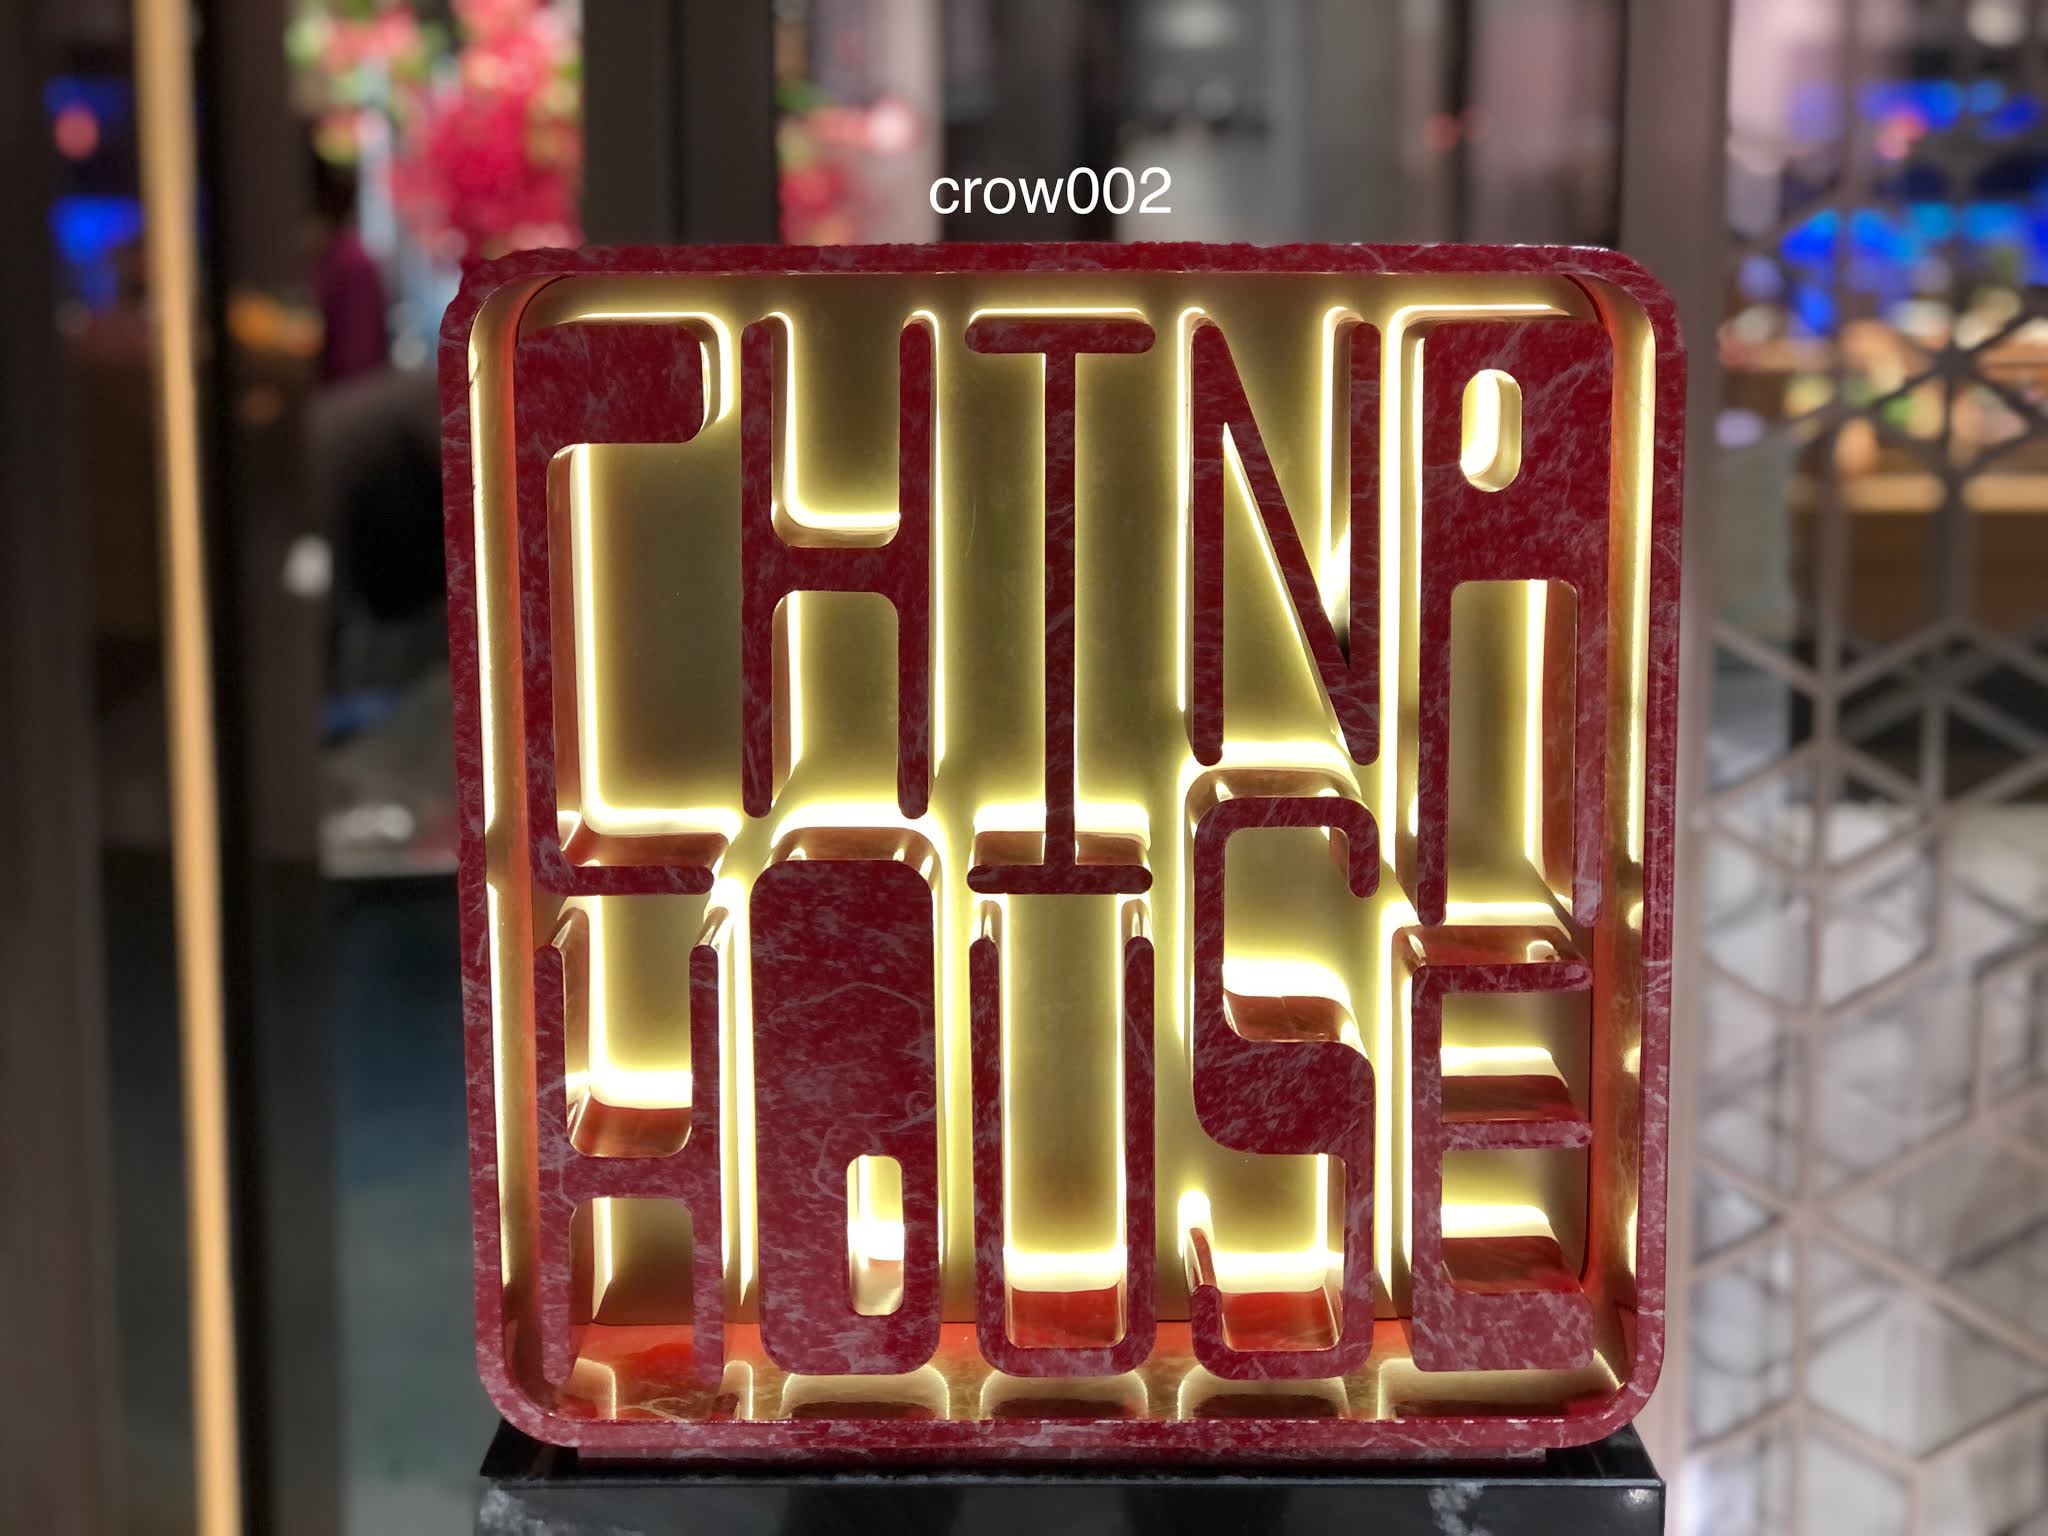 CHINA HOUSE at GRAND HYATT JEJU DREAM TOWER  - 그랜드 하얏트 제주 드림 타워 차이나 하우스 2021년 2월